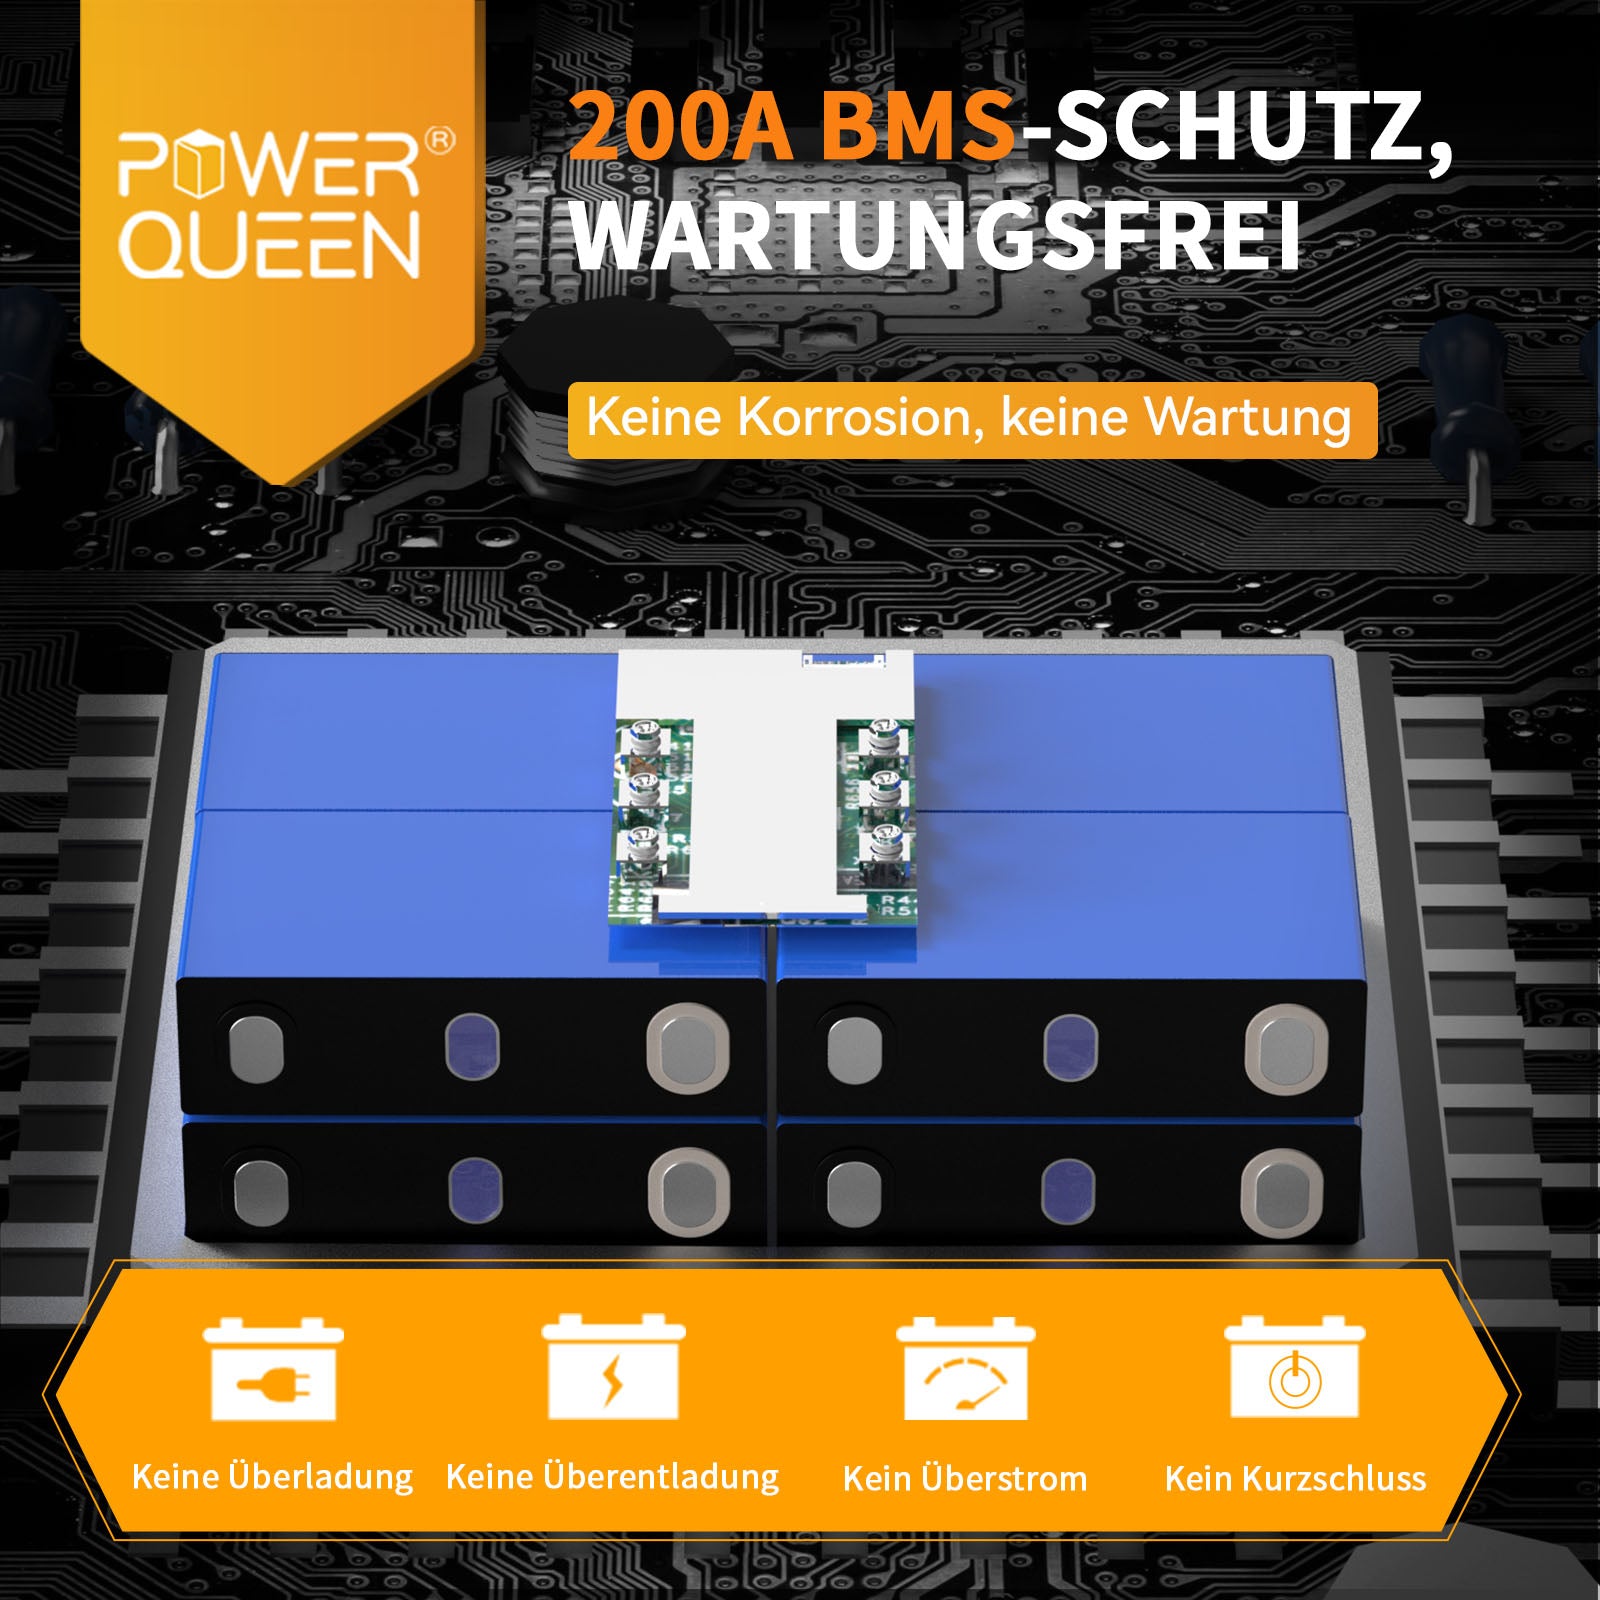 Power Queen 12,8V 300Ah LiFePO4 Batterie, Integriertes 200A BMS